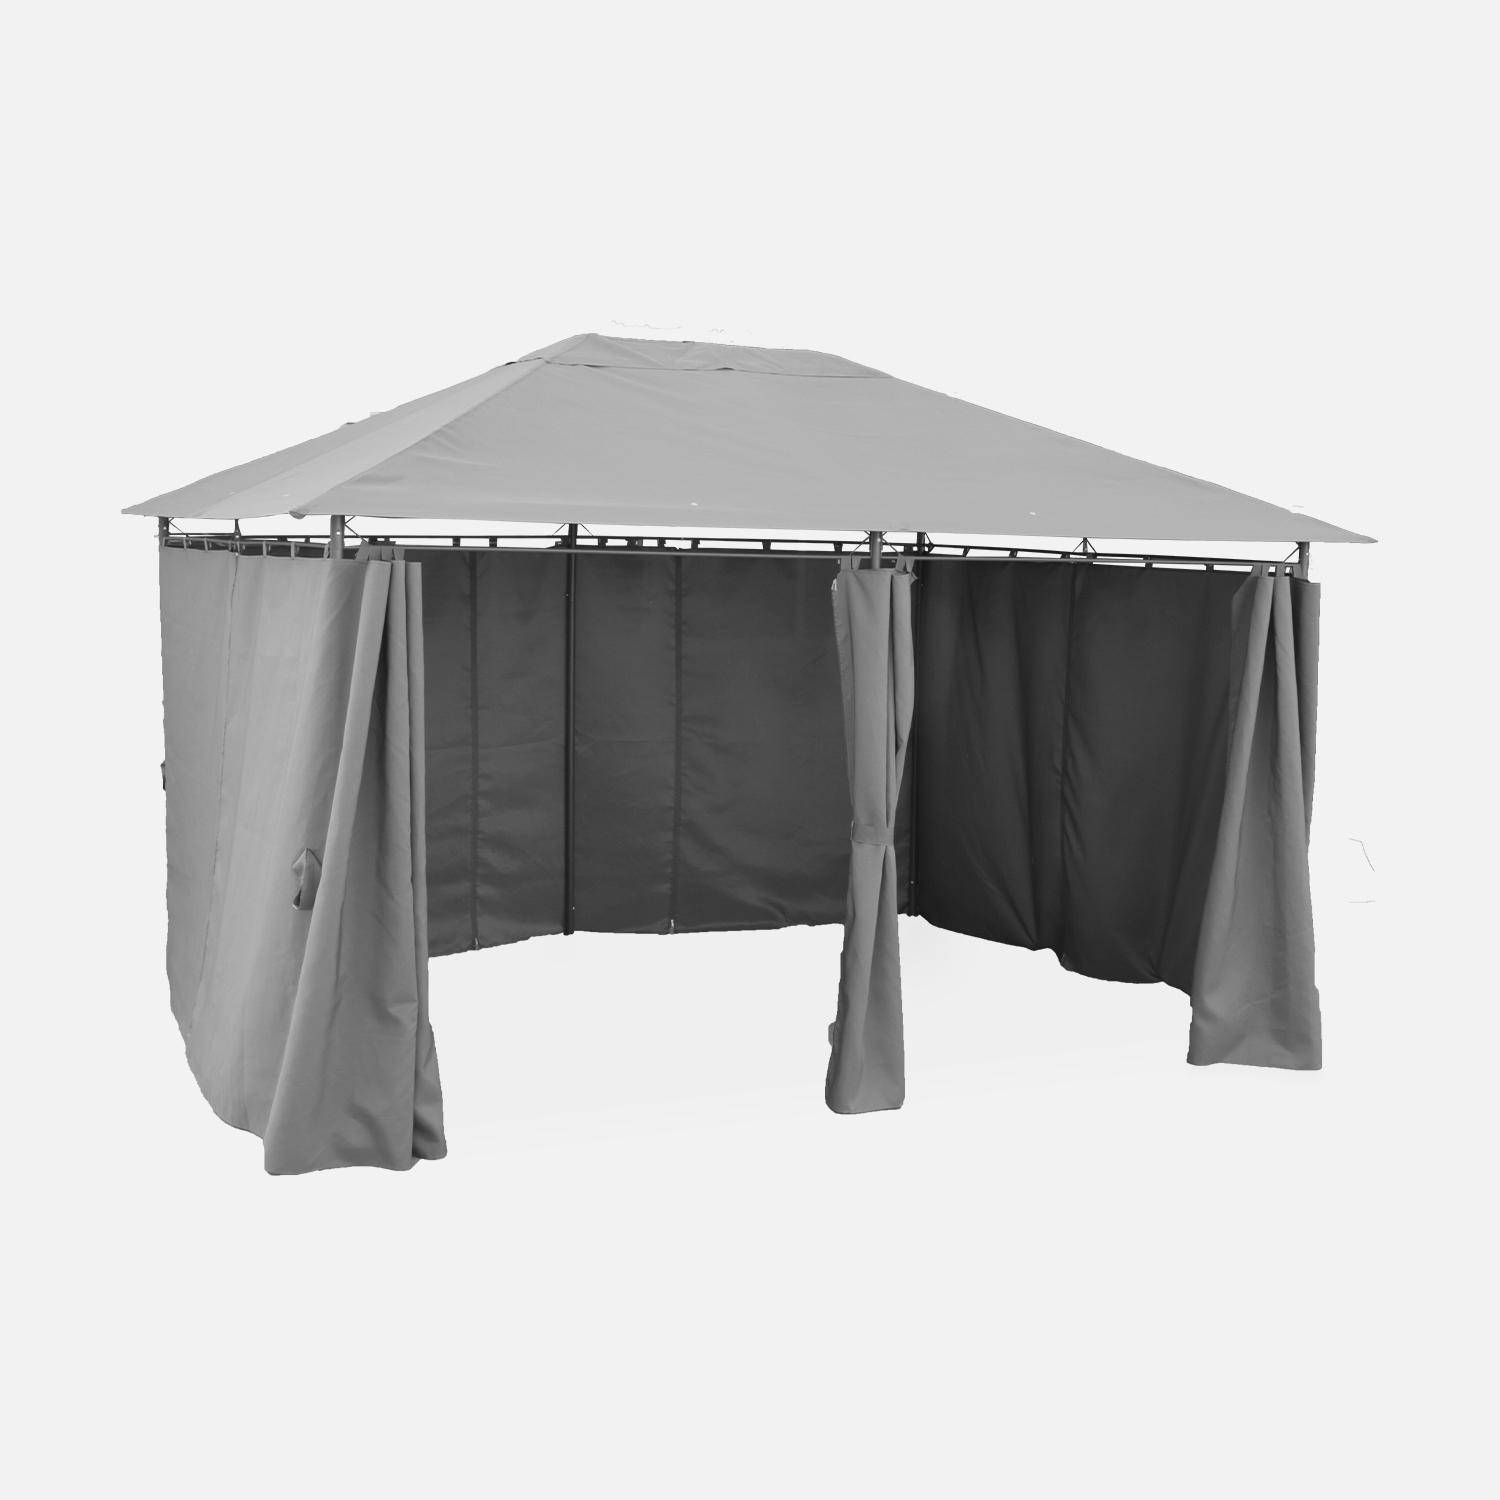 Pergola 3x4m - Divio - Tela grigia - Pergola con tende, tenda da giardino, gazebo, ricevimenti Photo2